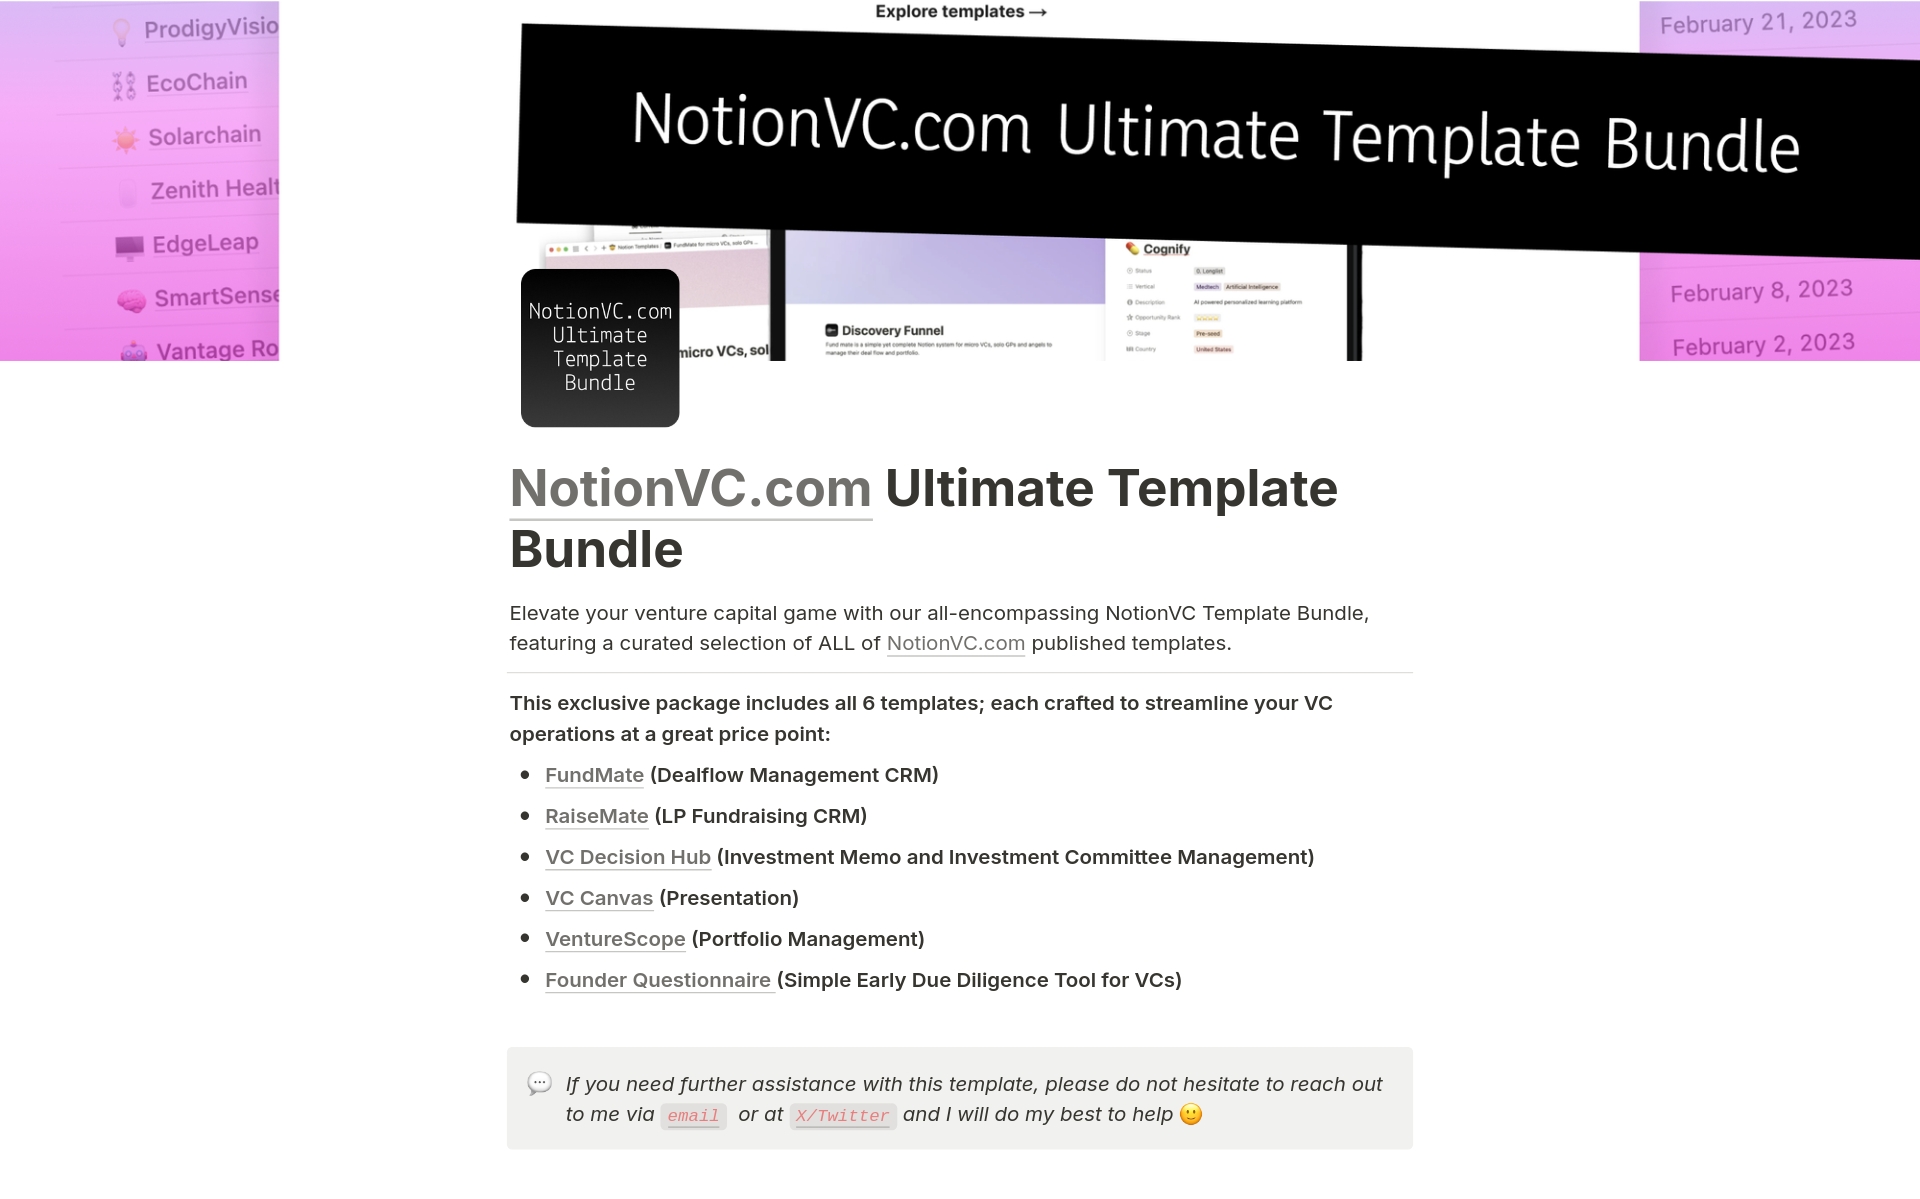 Vista previa de una plantilla para Ultimate Template Bundle for VCs